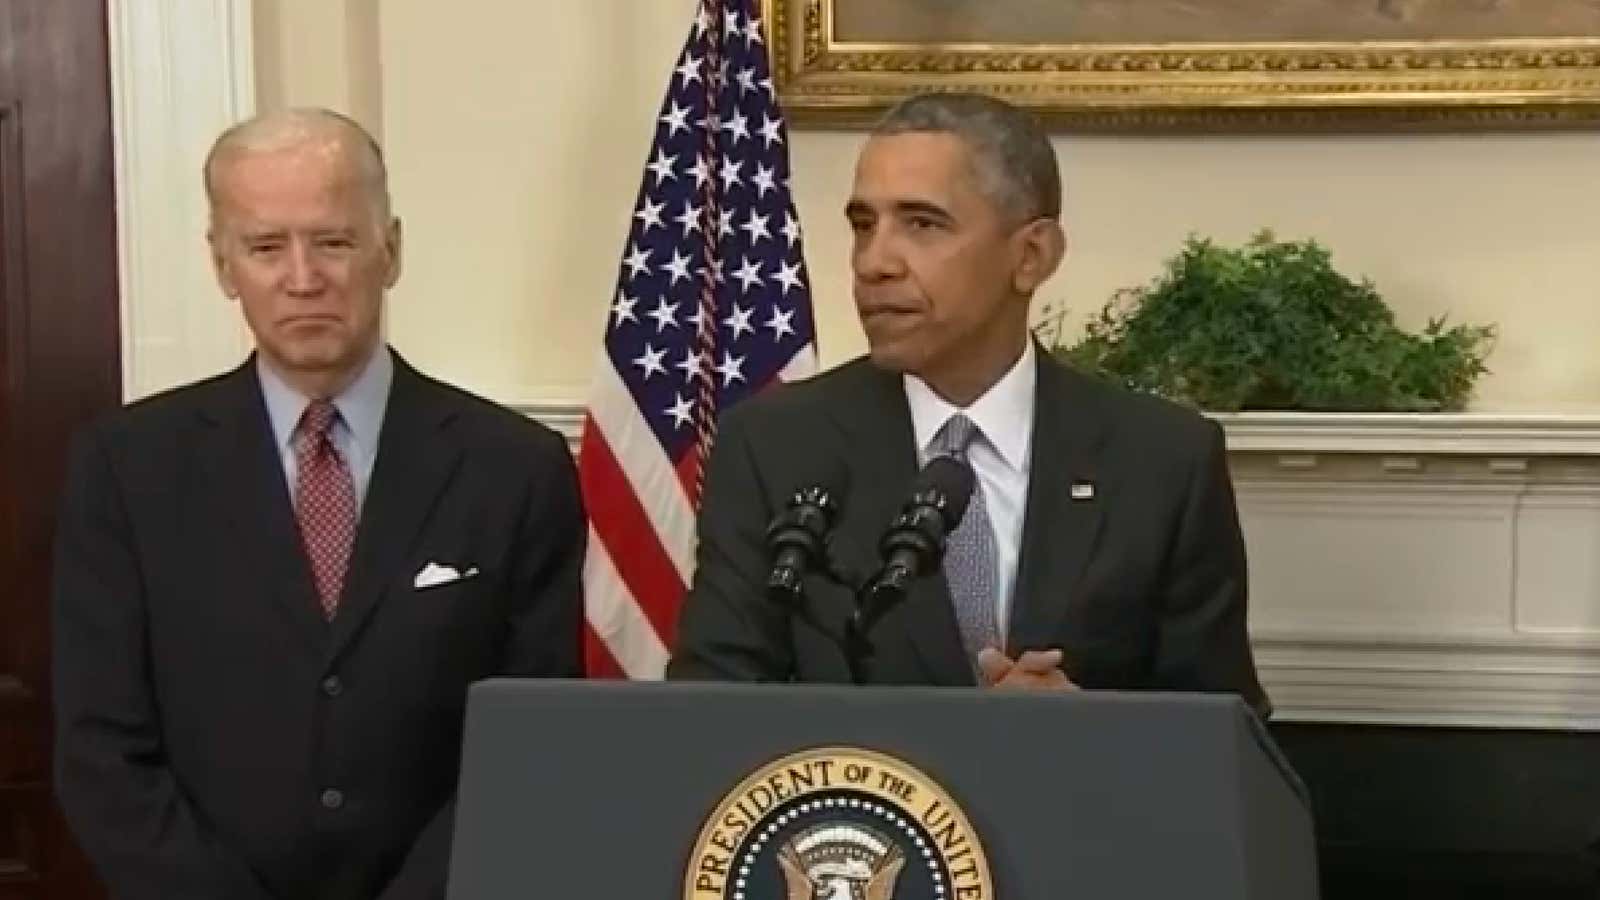 President Obama announces new plan to close Guantanamo Bay